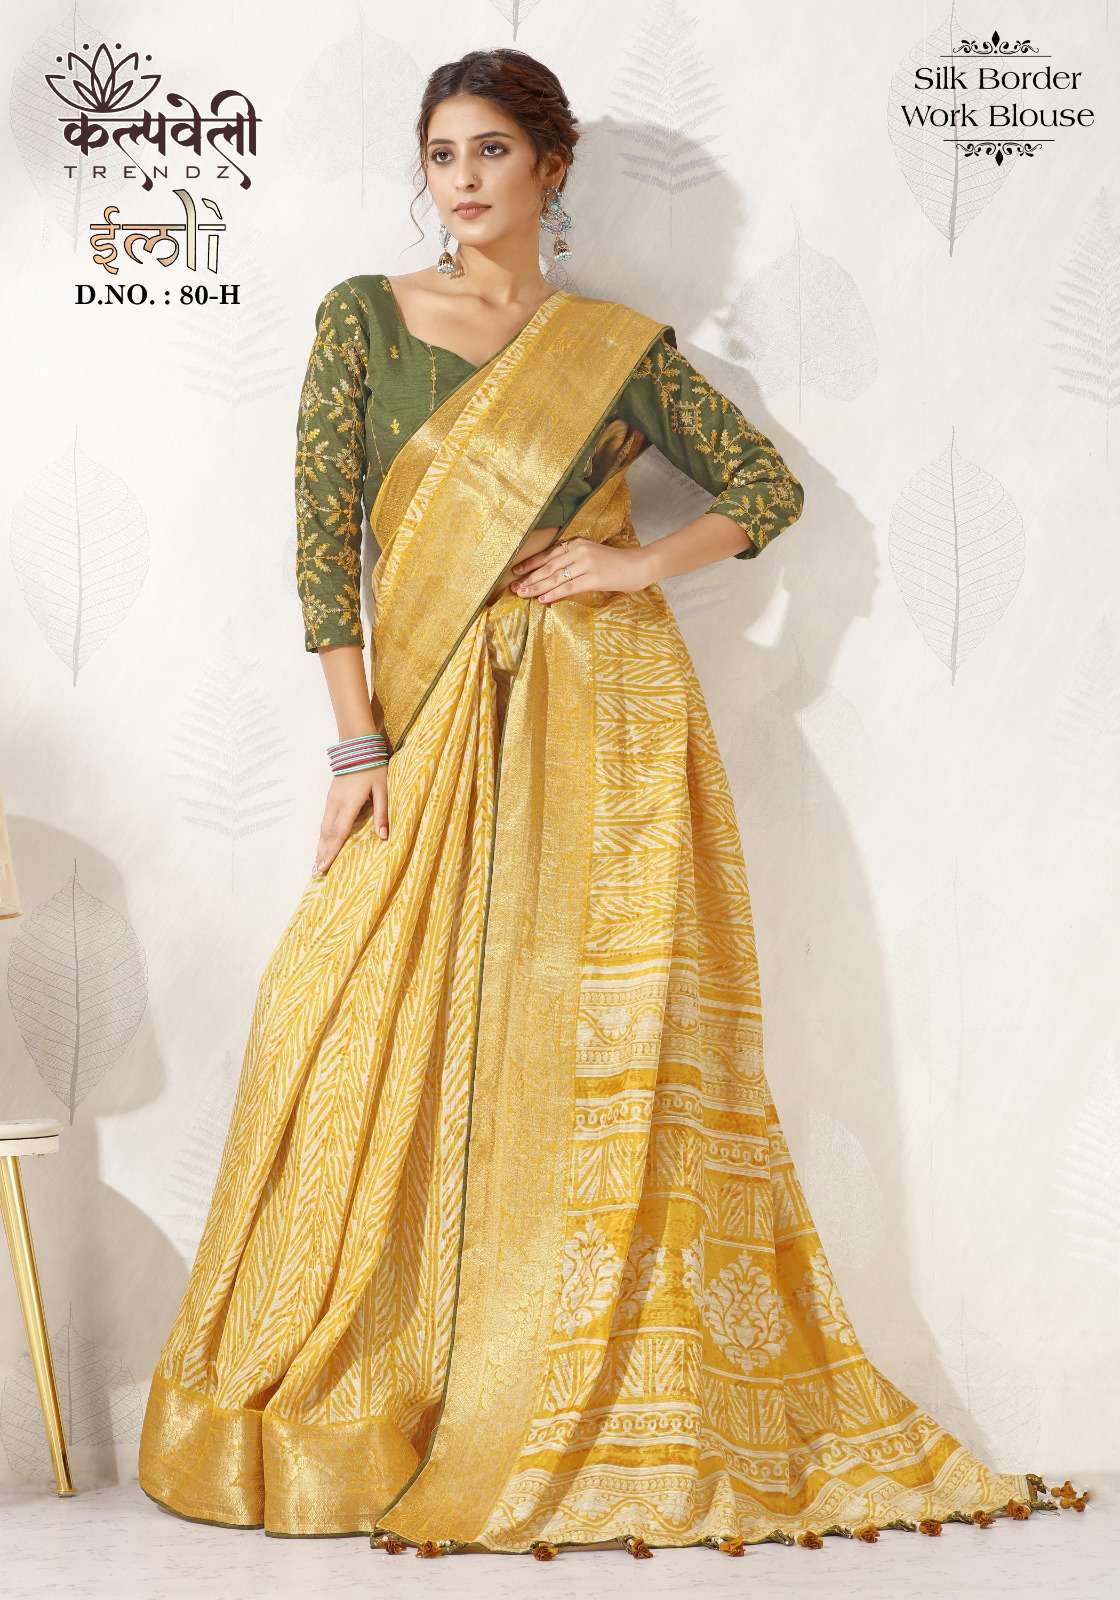 kalpavelly trendz imli 80 amazing print with jacquard border saree collection